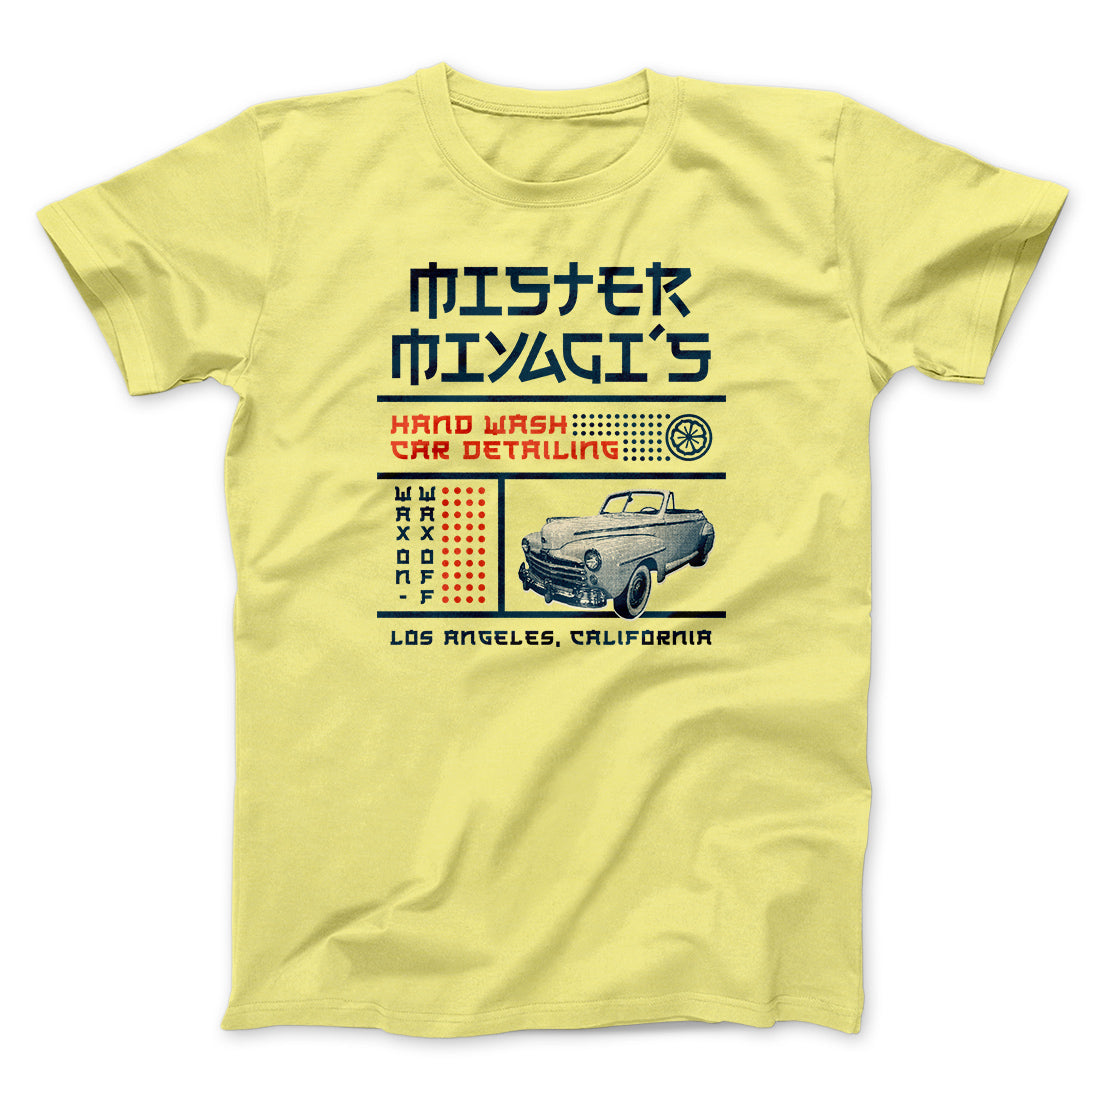 Mr. Miyagi's Car Detailing Men/Unisex T-Shirt - Famous IRL